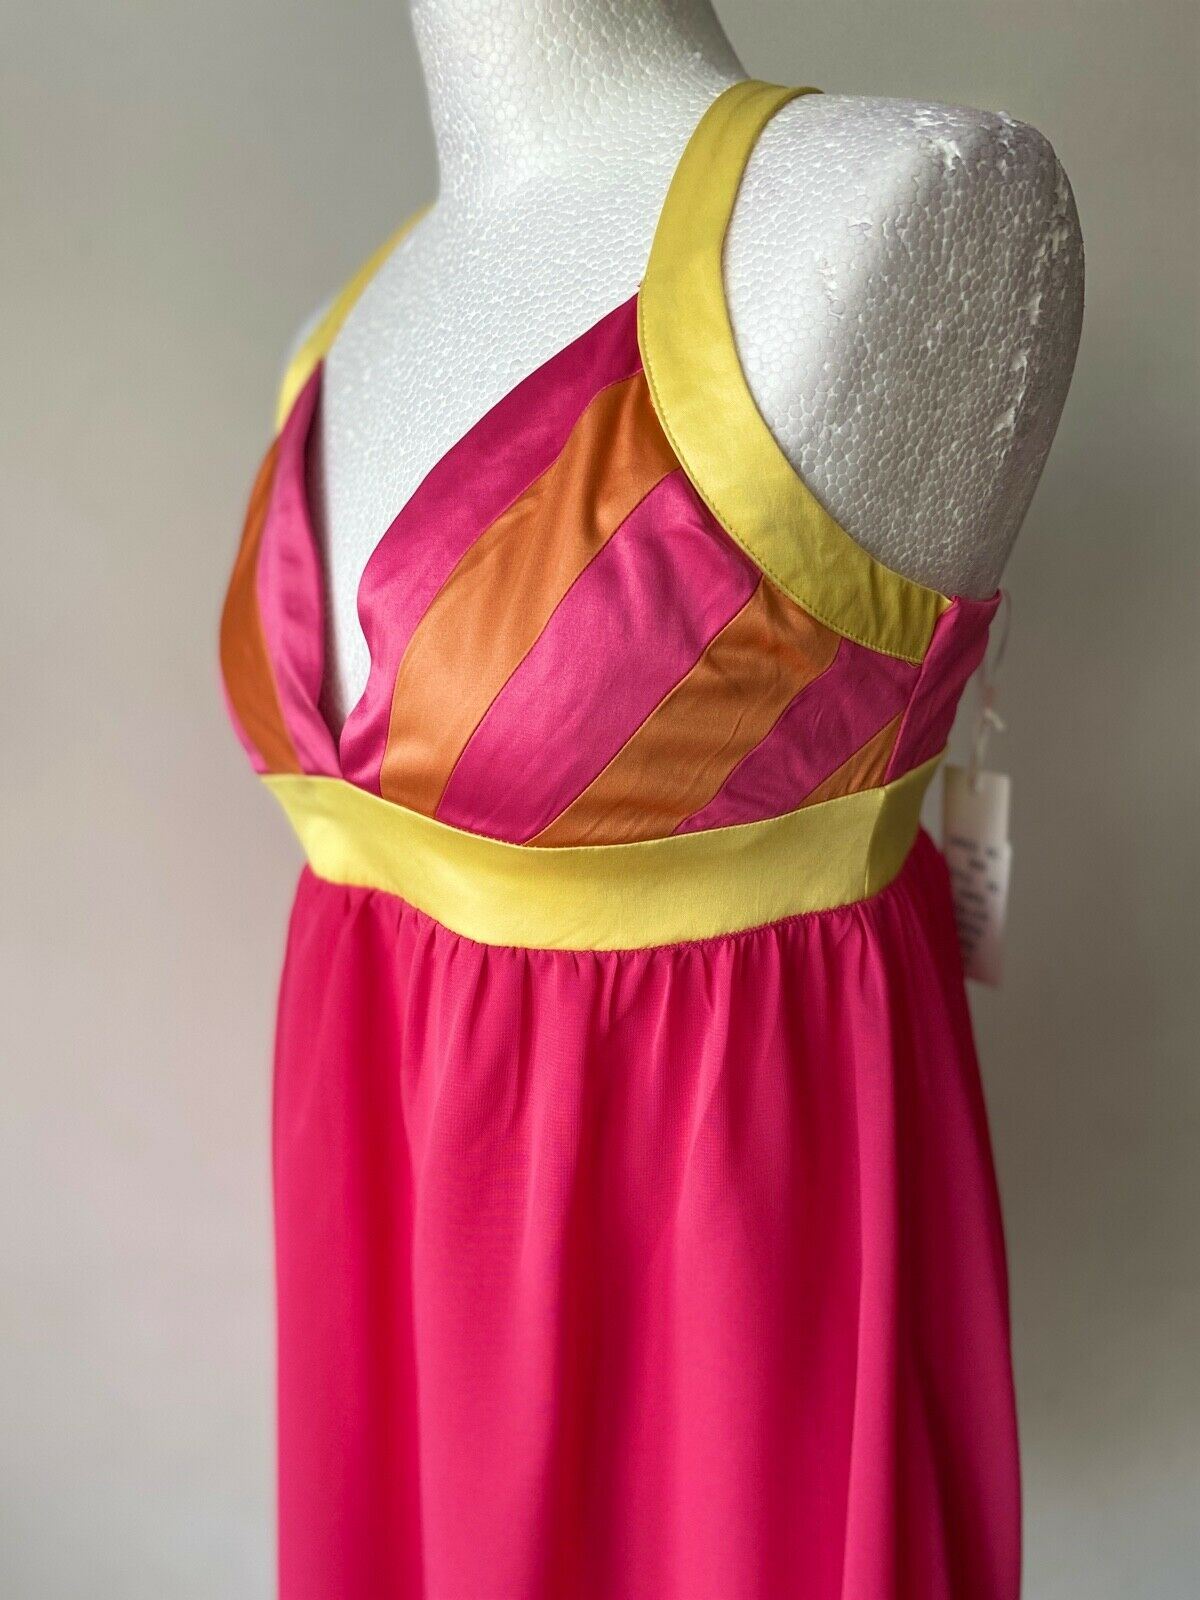 Parisian Limited Edition Pink Yellow Mesh Skirt Dress